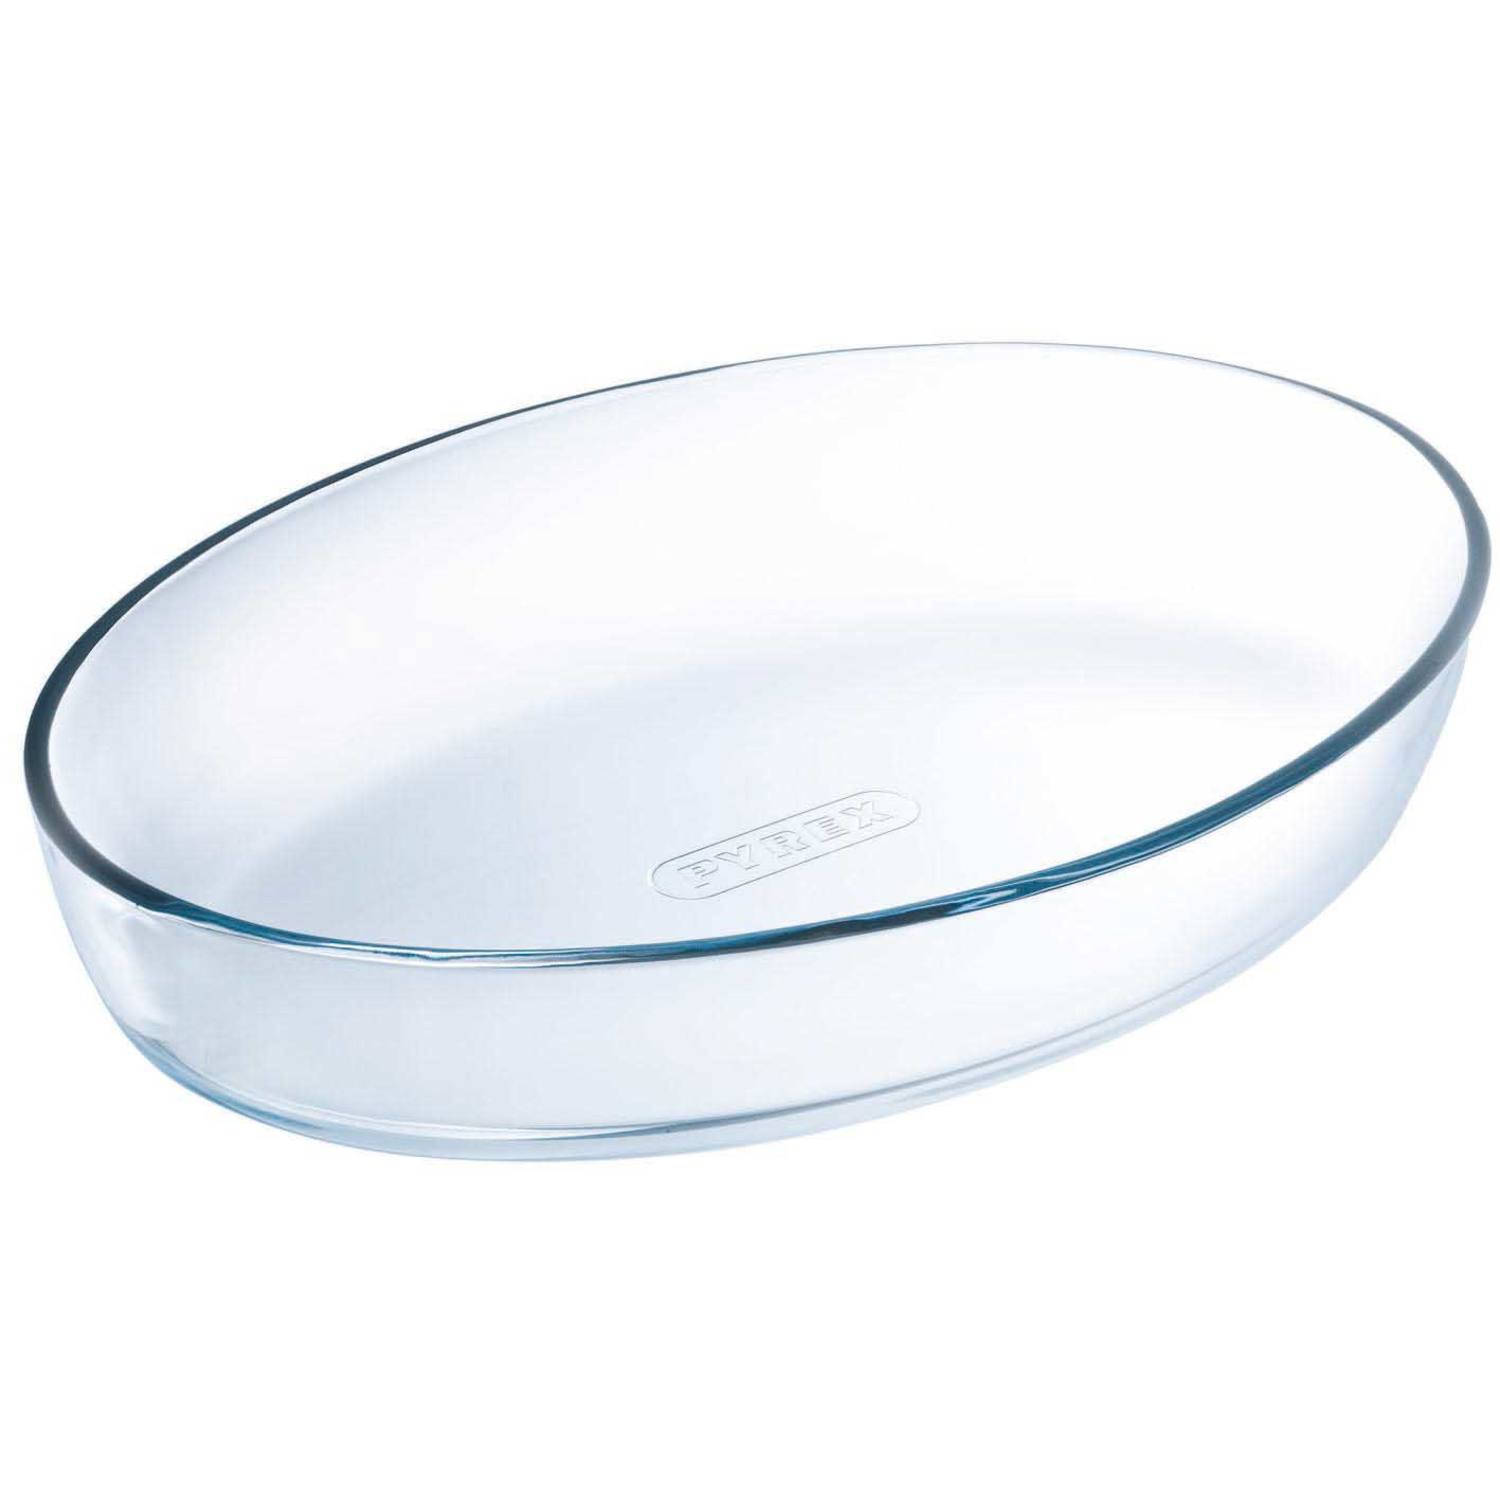 Pyrex braadpan, glas, transparant, 39 x 27 cm.